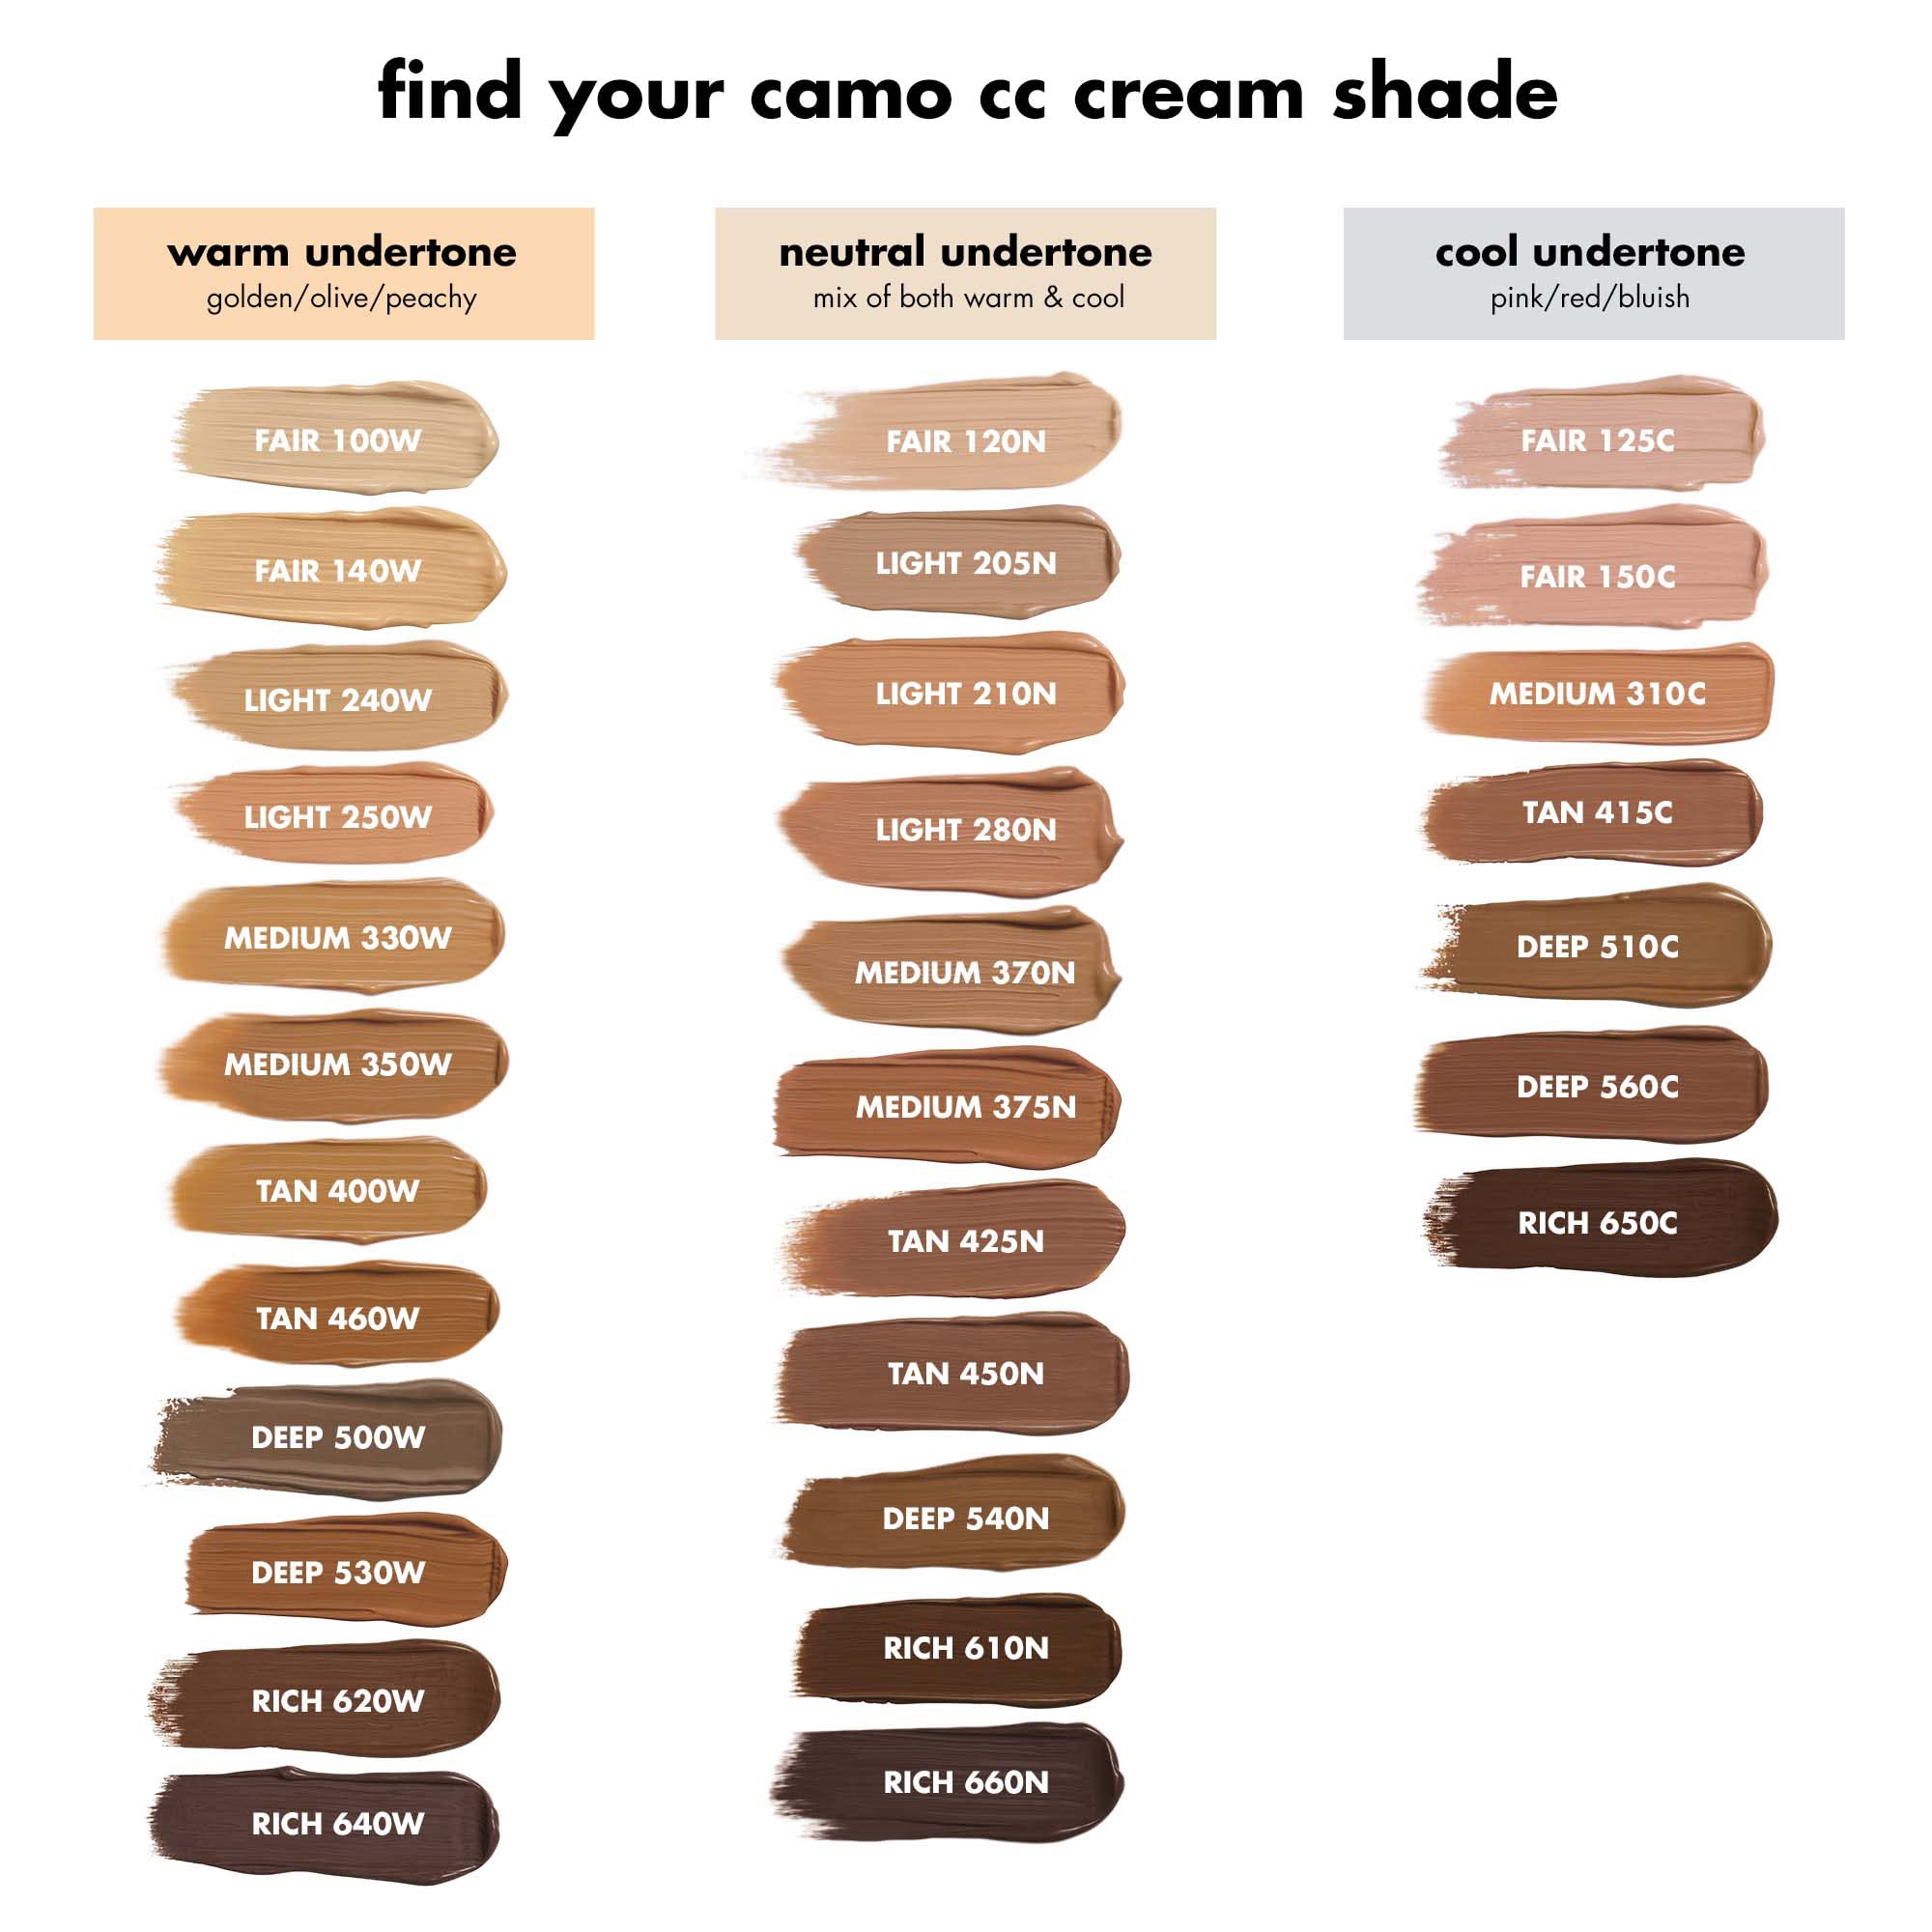 e.l.f. Camo CC Cream, Color Correcting Medium-To-Full Coverage Foundation with SPF 30, Fair 125 C, 1.05 Oz (30g)